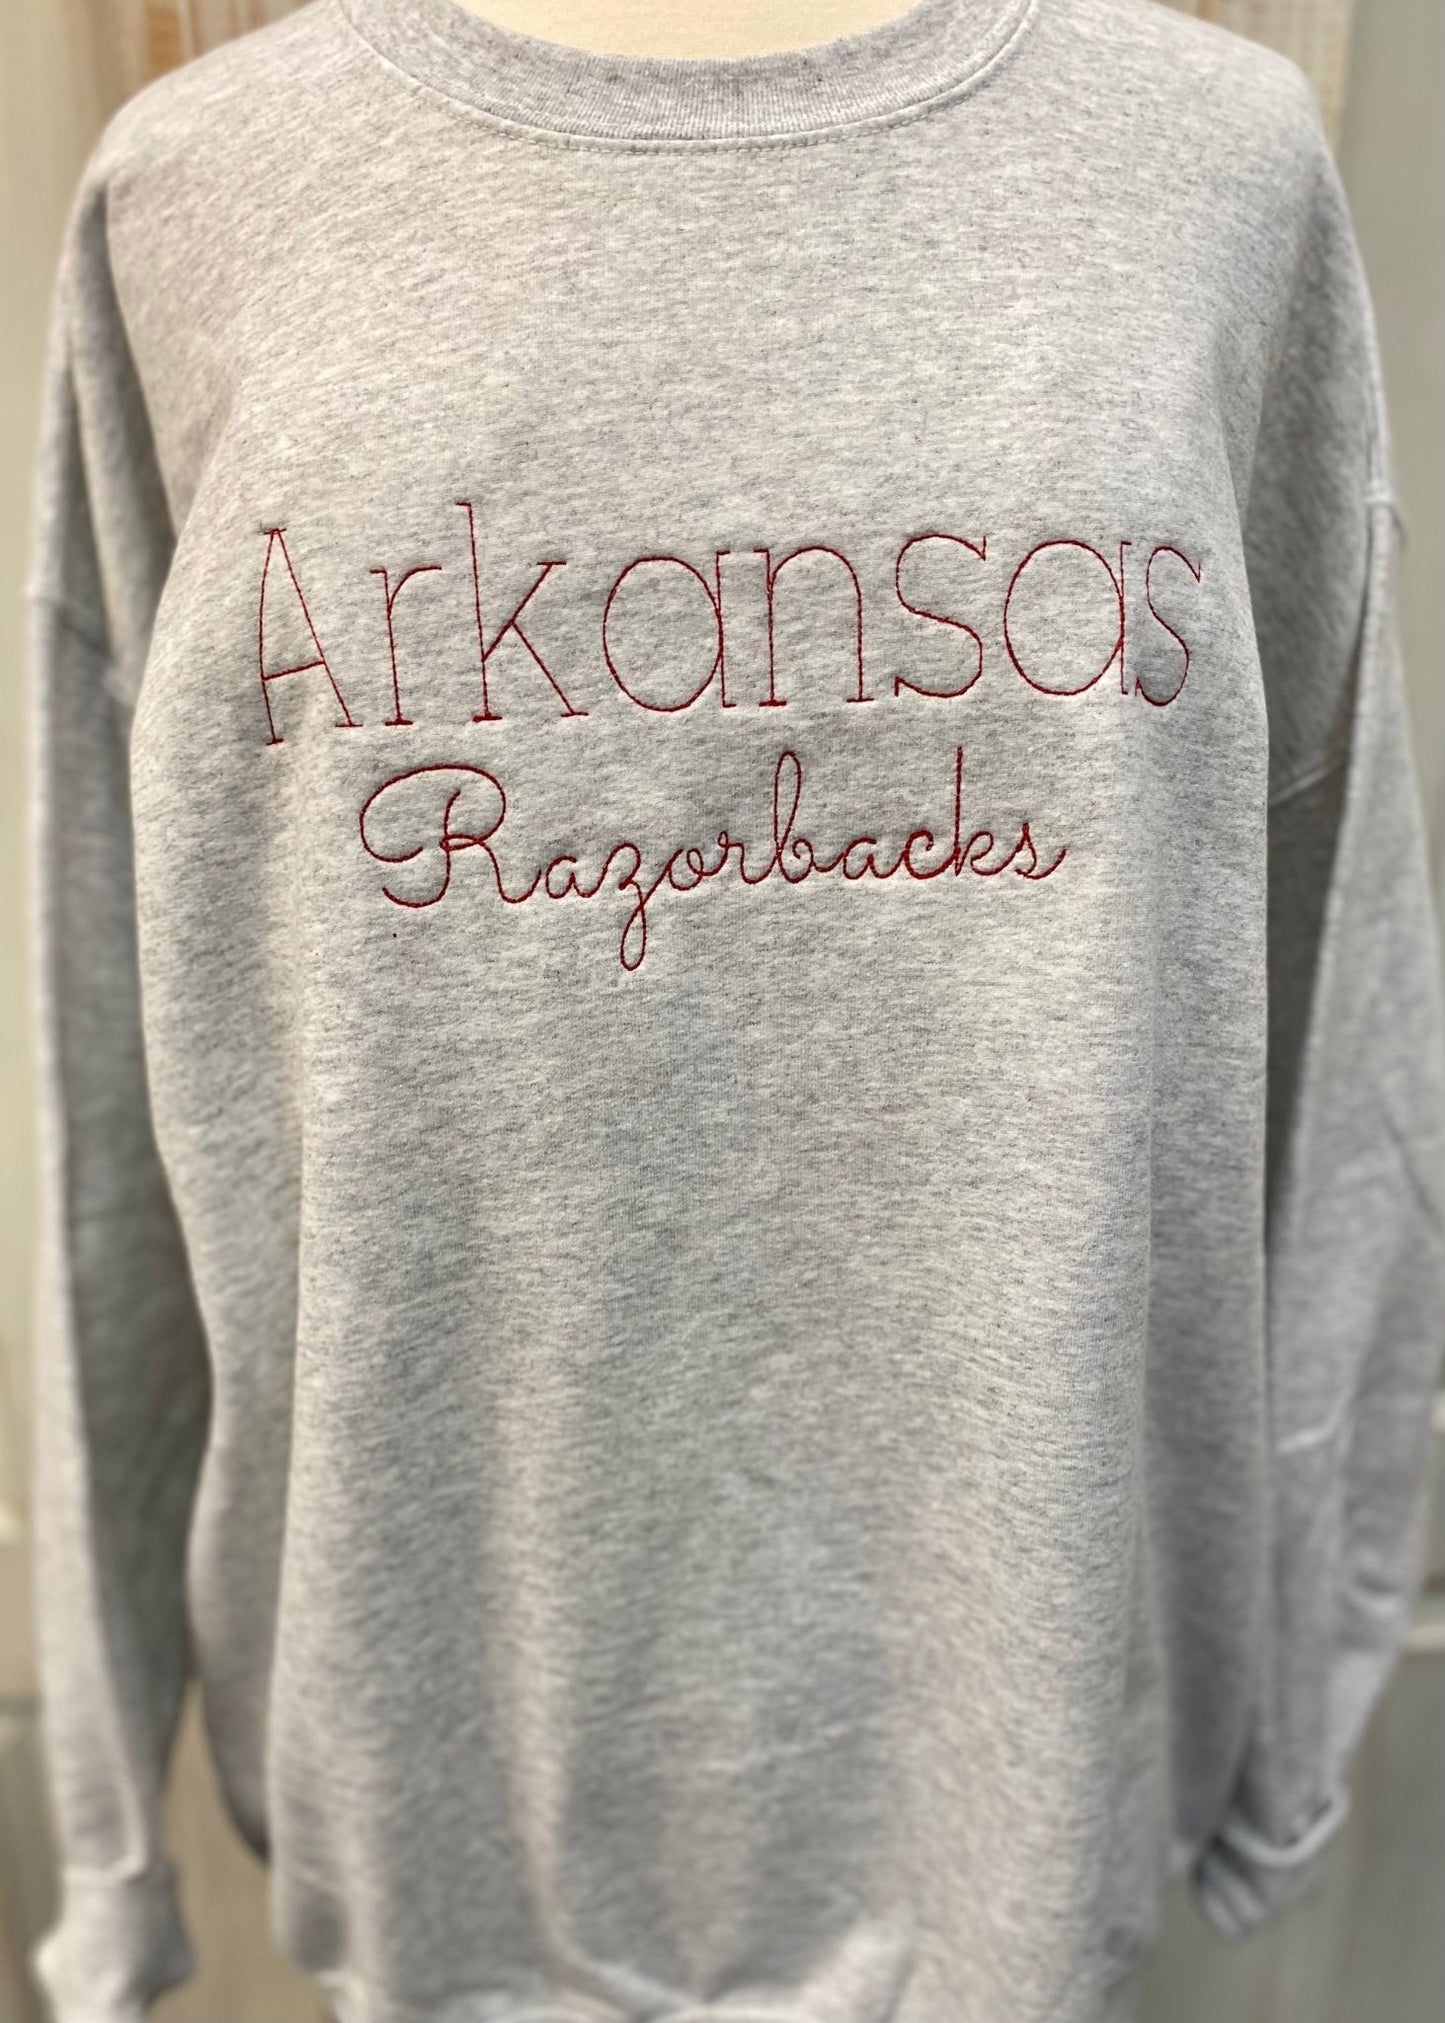 Arkansas Razorbacks Stitched Sweatshirt - Light Grey - Jimberly's Boutique